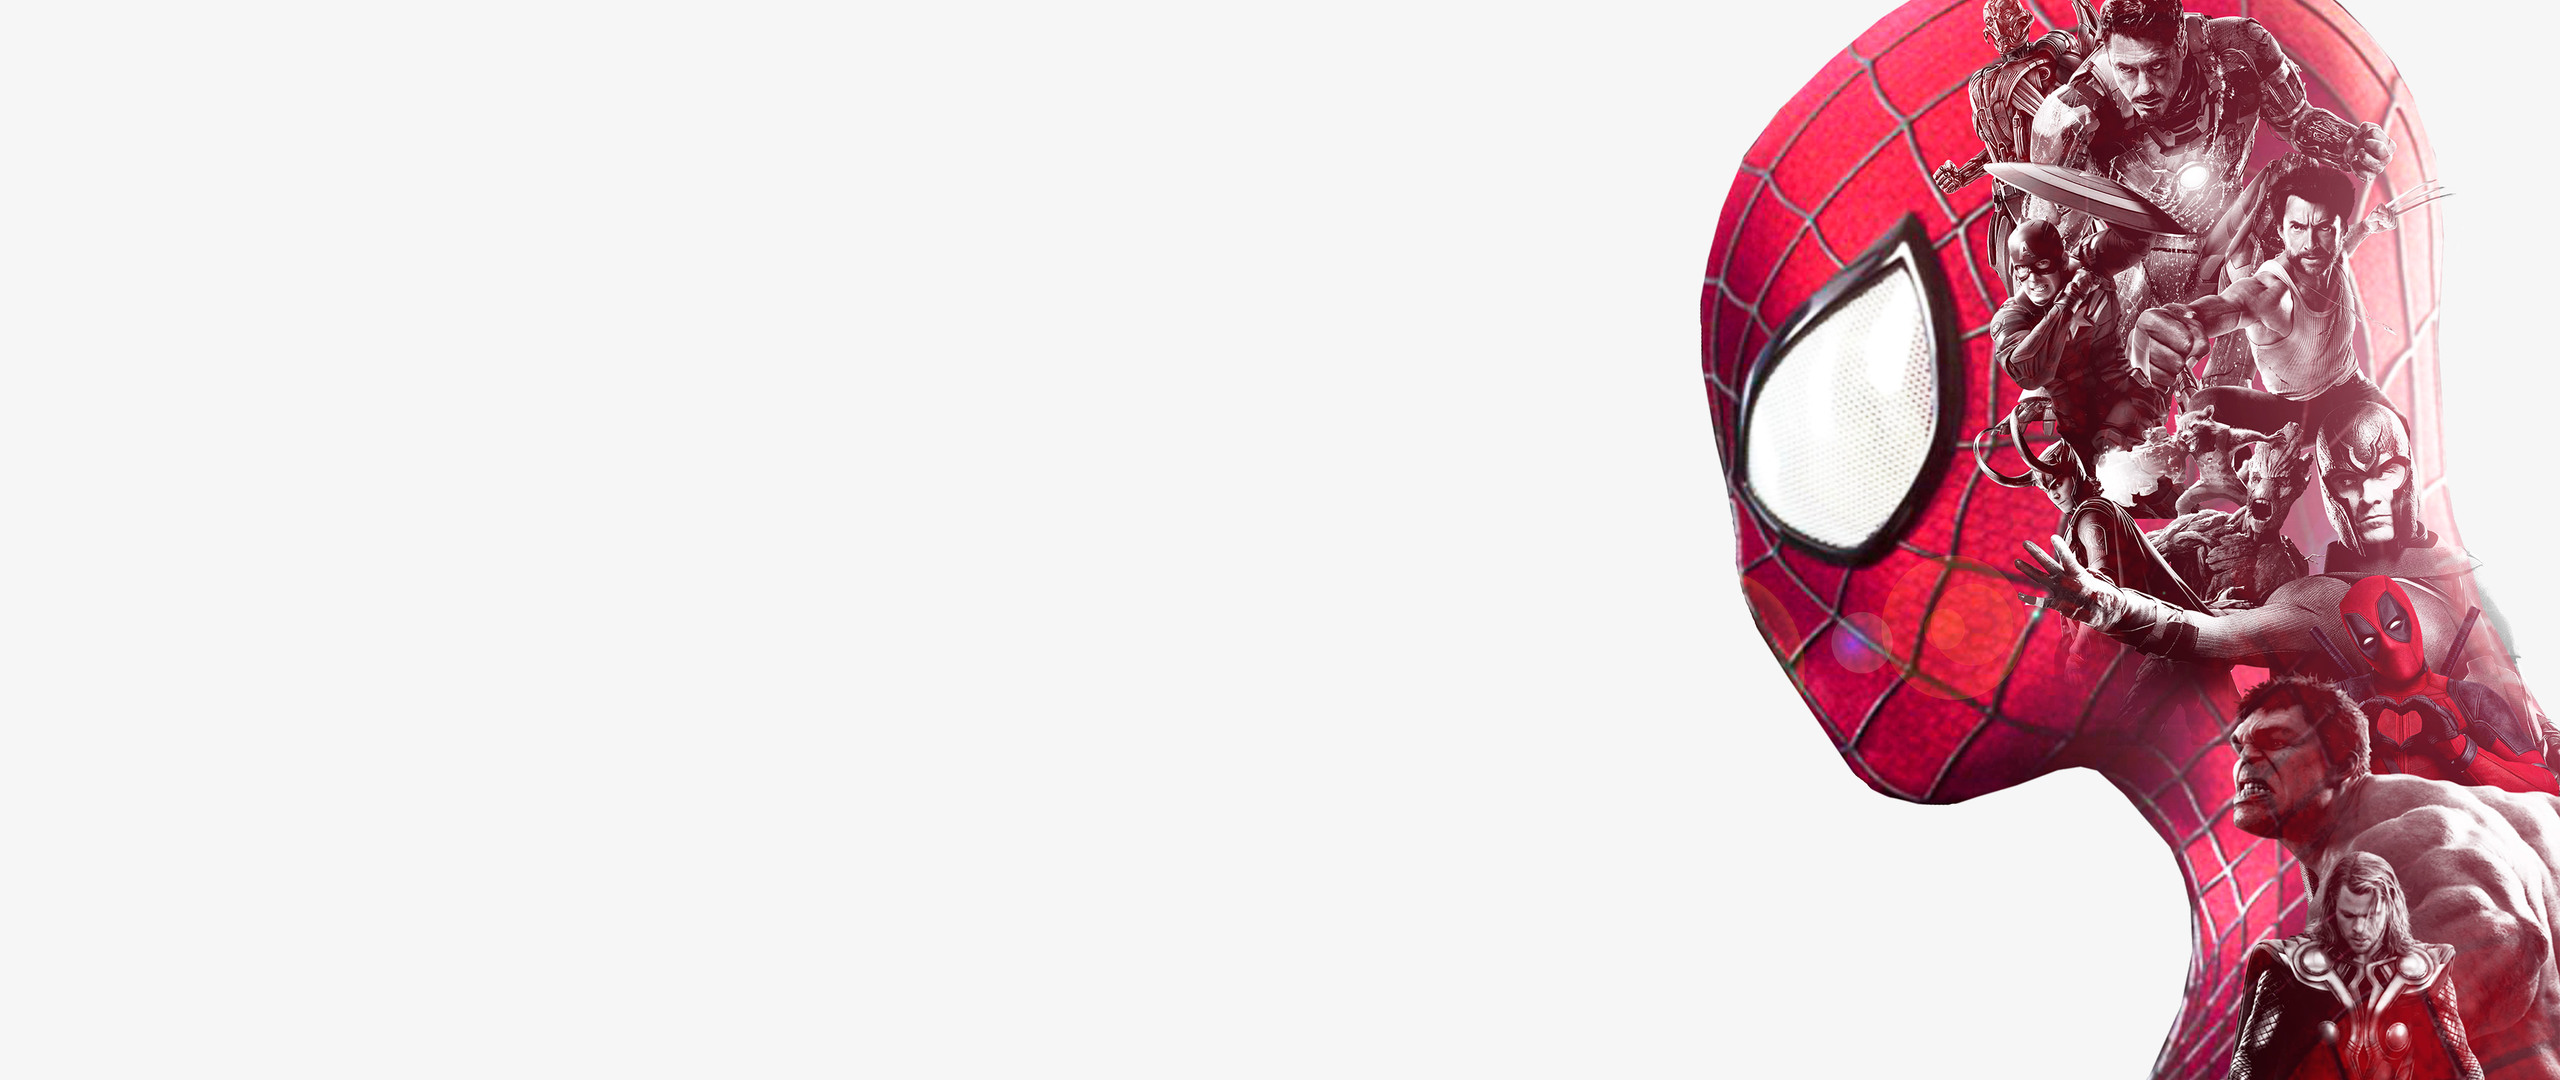 spiderman-superheroes-double-exposure-to-2560x1080.jpg